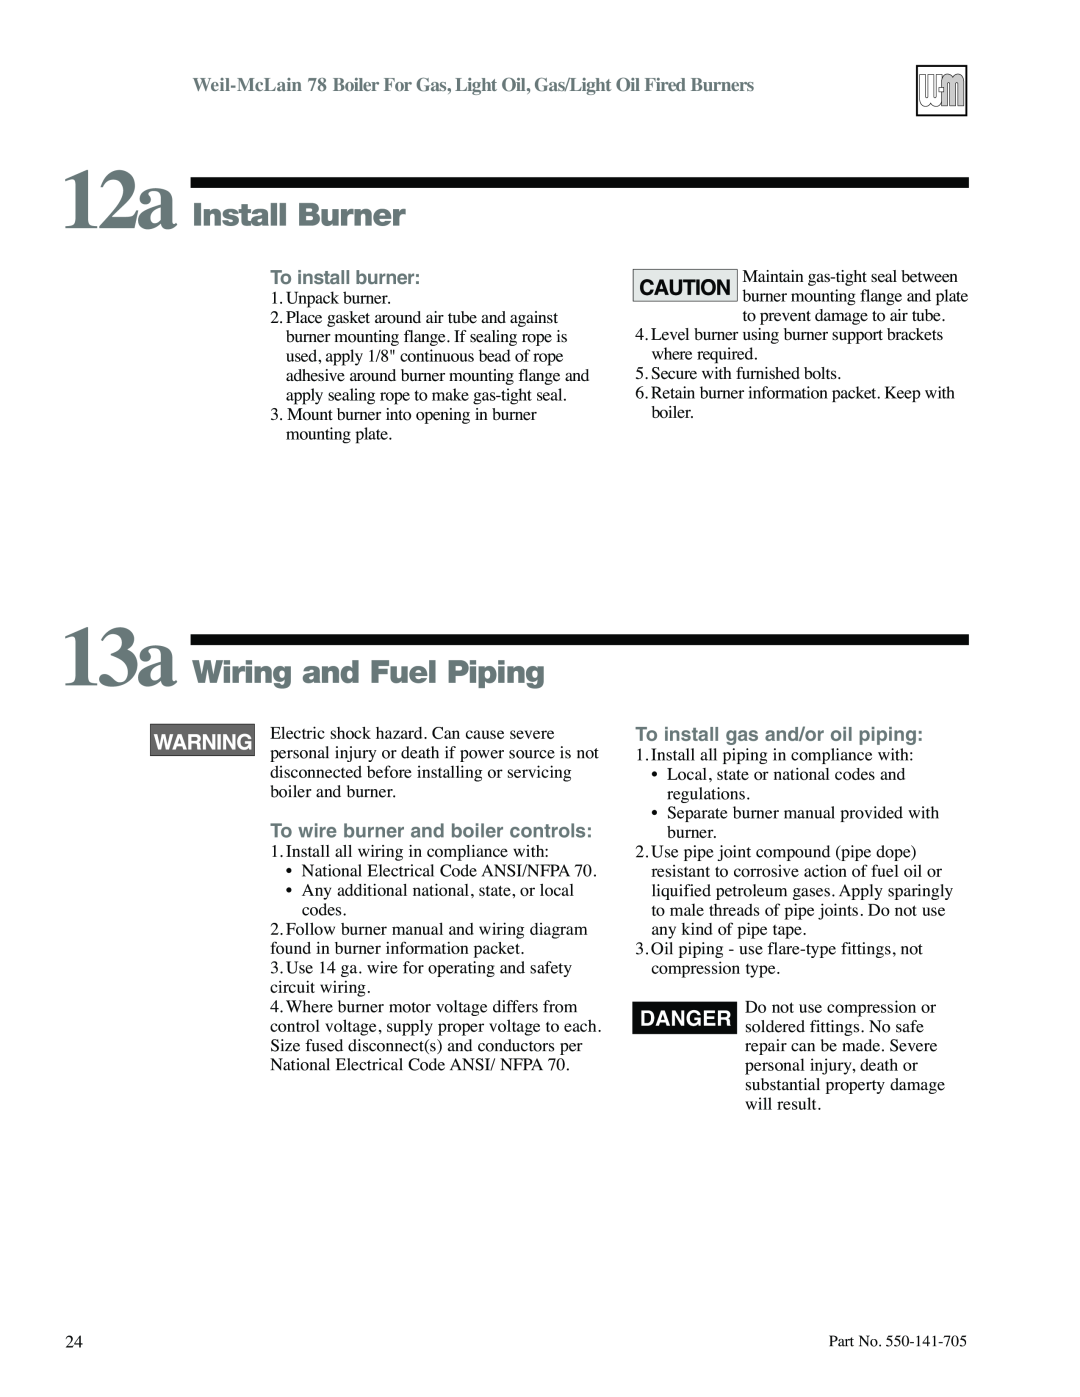 Weil-McLain 78 manual 12a Install Burner, 13a Wiring and Fuel Piping, To install burner, To wire burner and boiler controls 